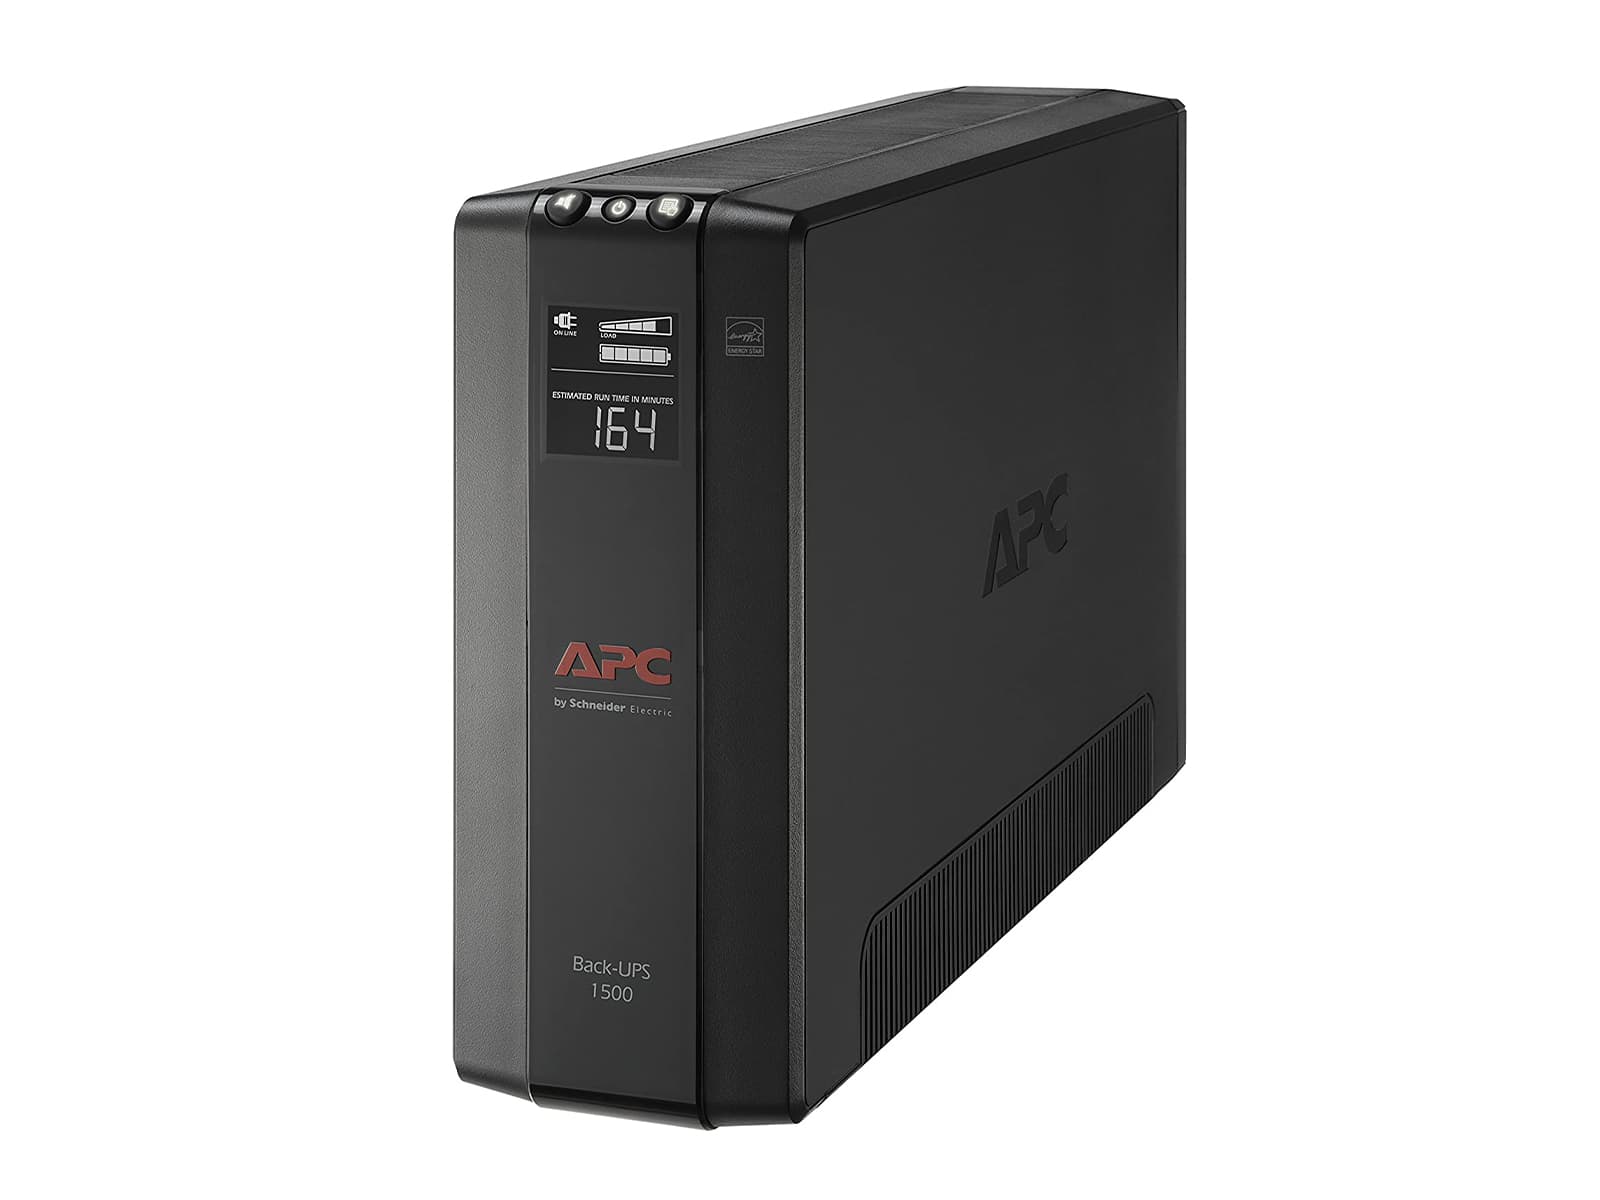 APC UPS, 1500VA UPS Battery Backup & Surge Protector with AVR, Back-UPS Pro Power Supply (BX1500M)